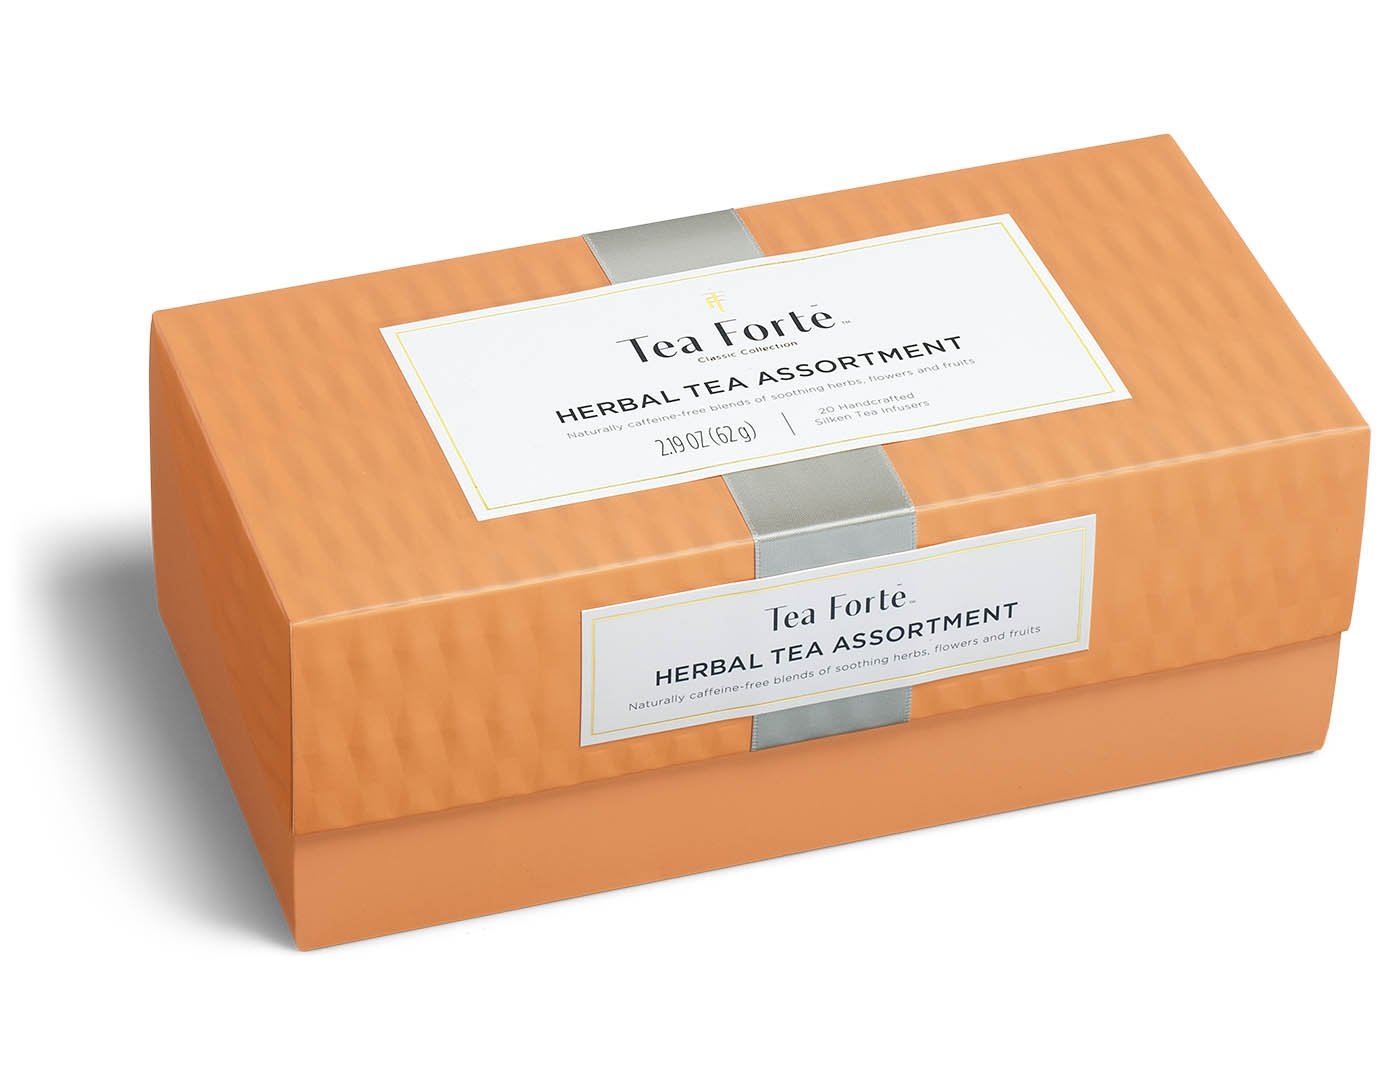 Herbal tea assortment in a 20 count presentation box